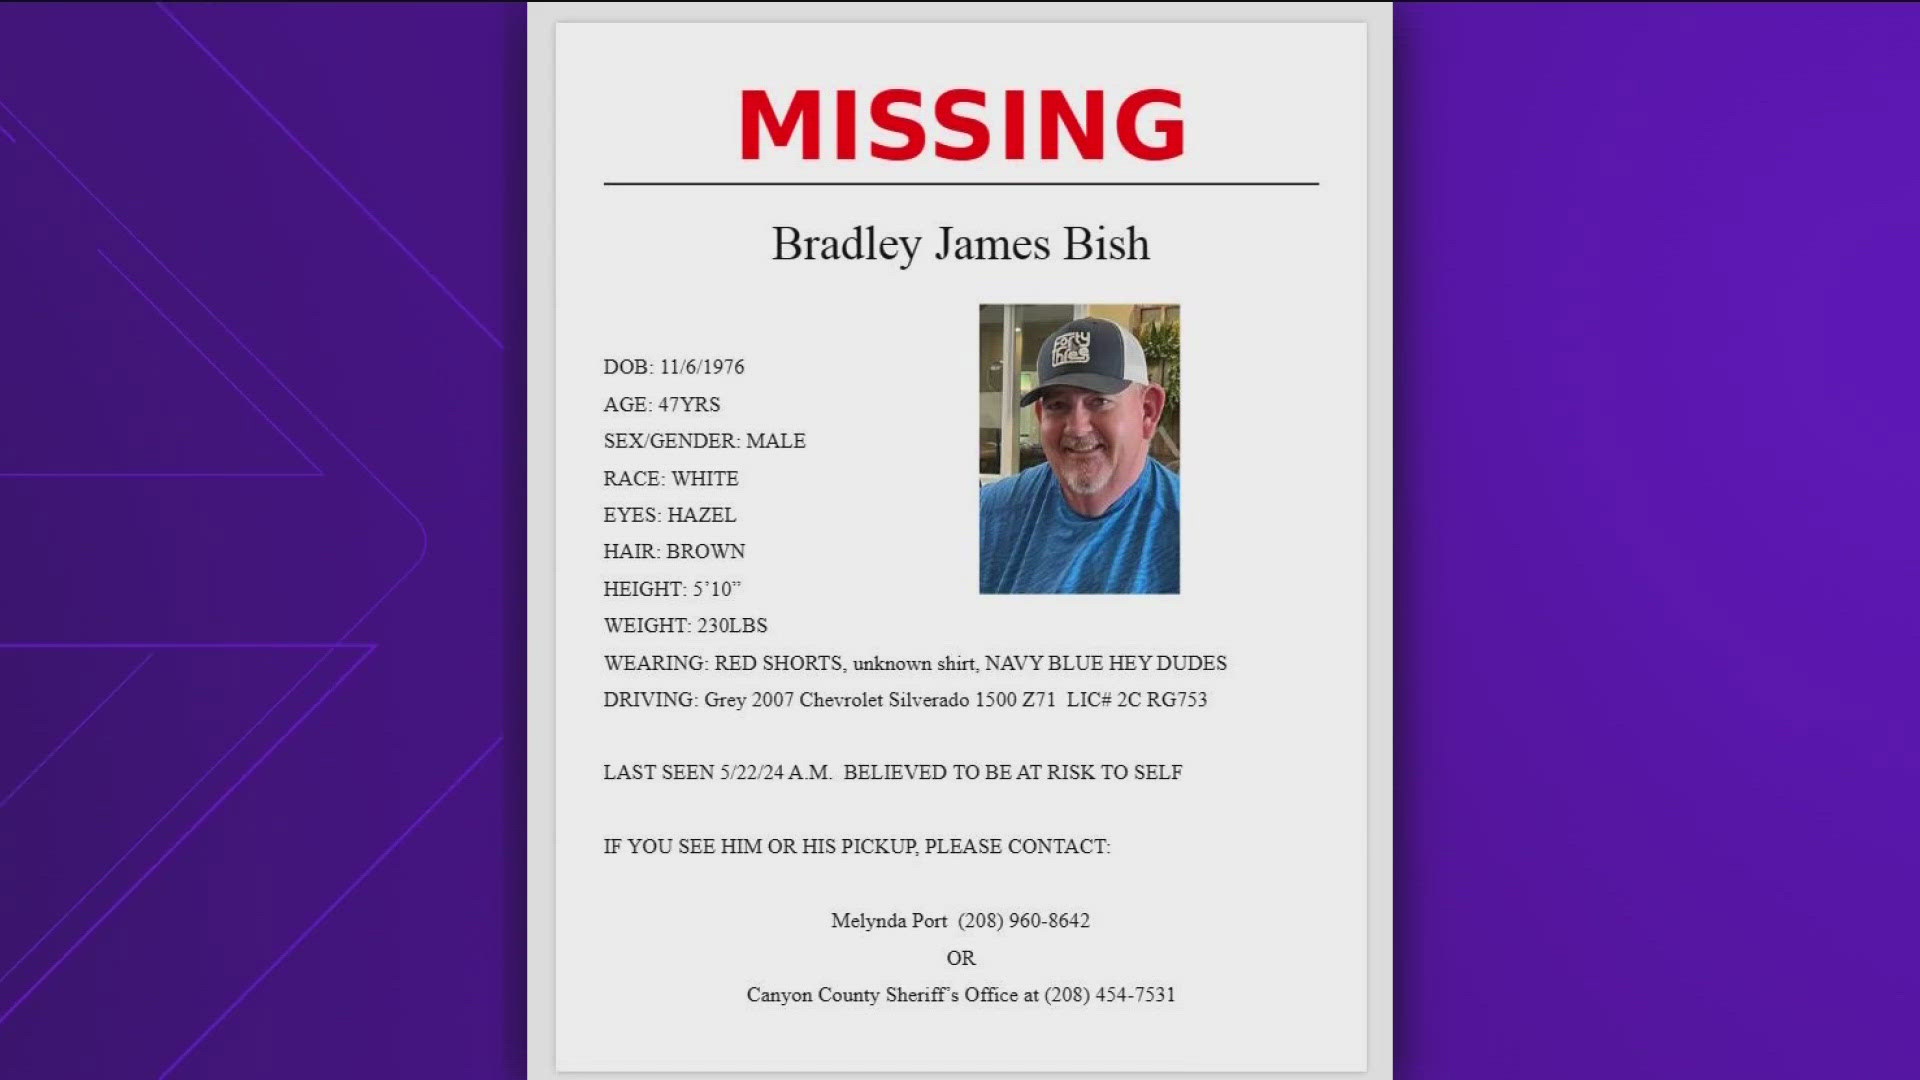 Officials said Bradley James Bish's Chevrolet Silverado was last seen around 8:50 p.m. Thursday near the Idaho-Nevada border.